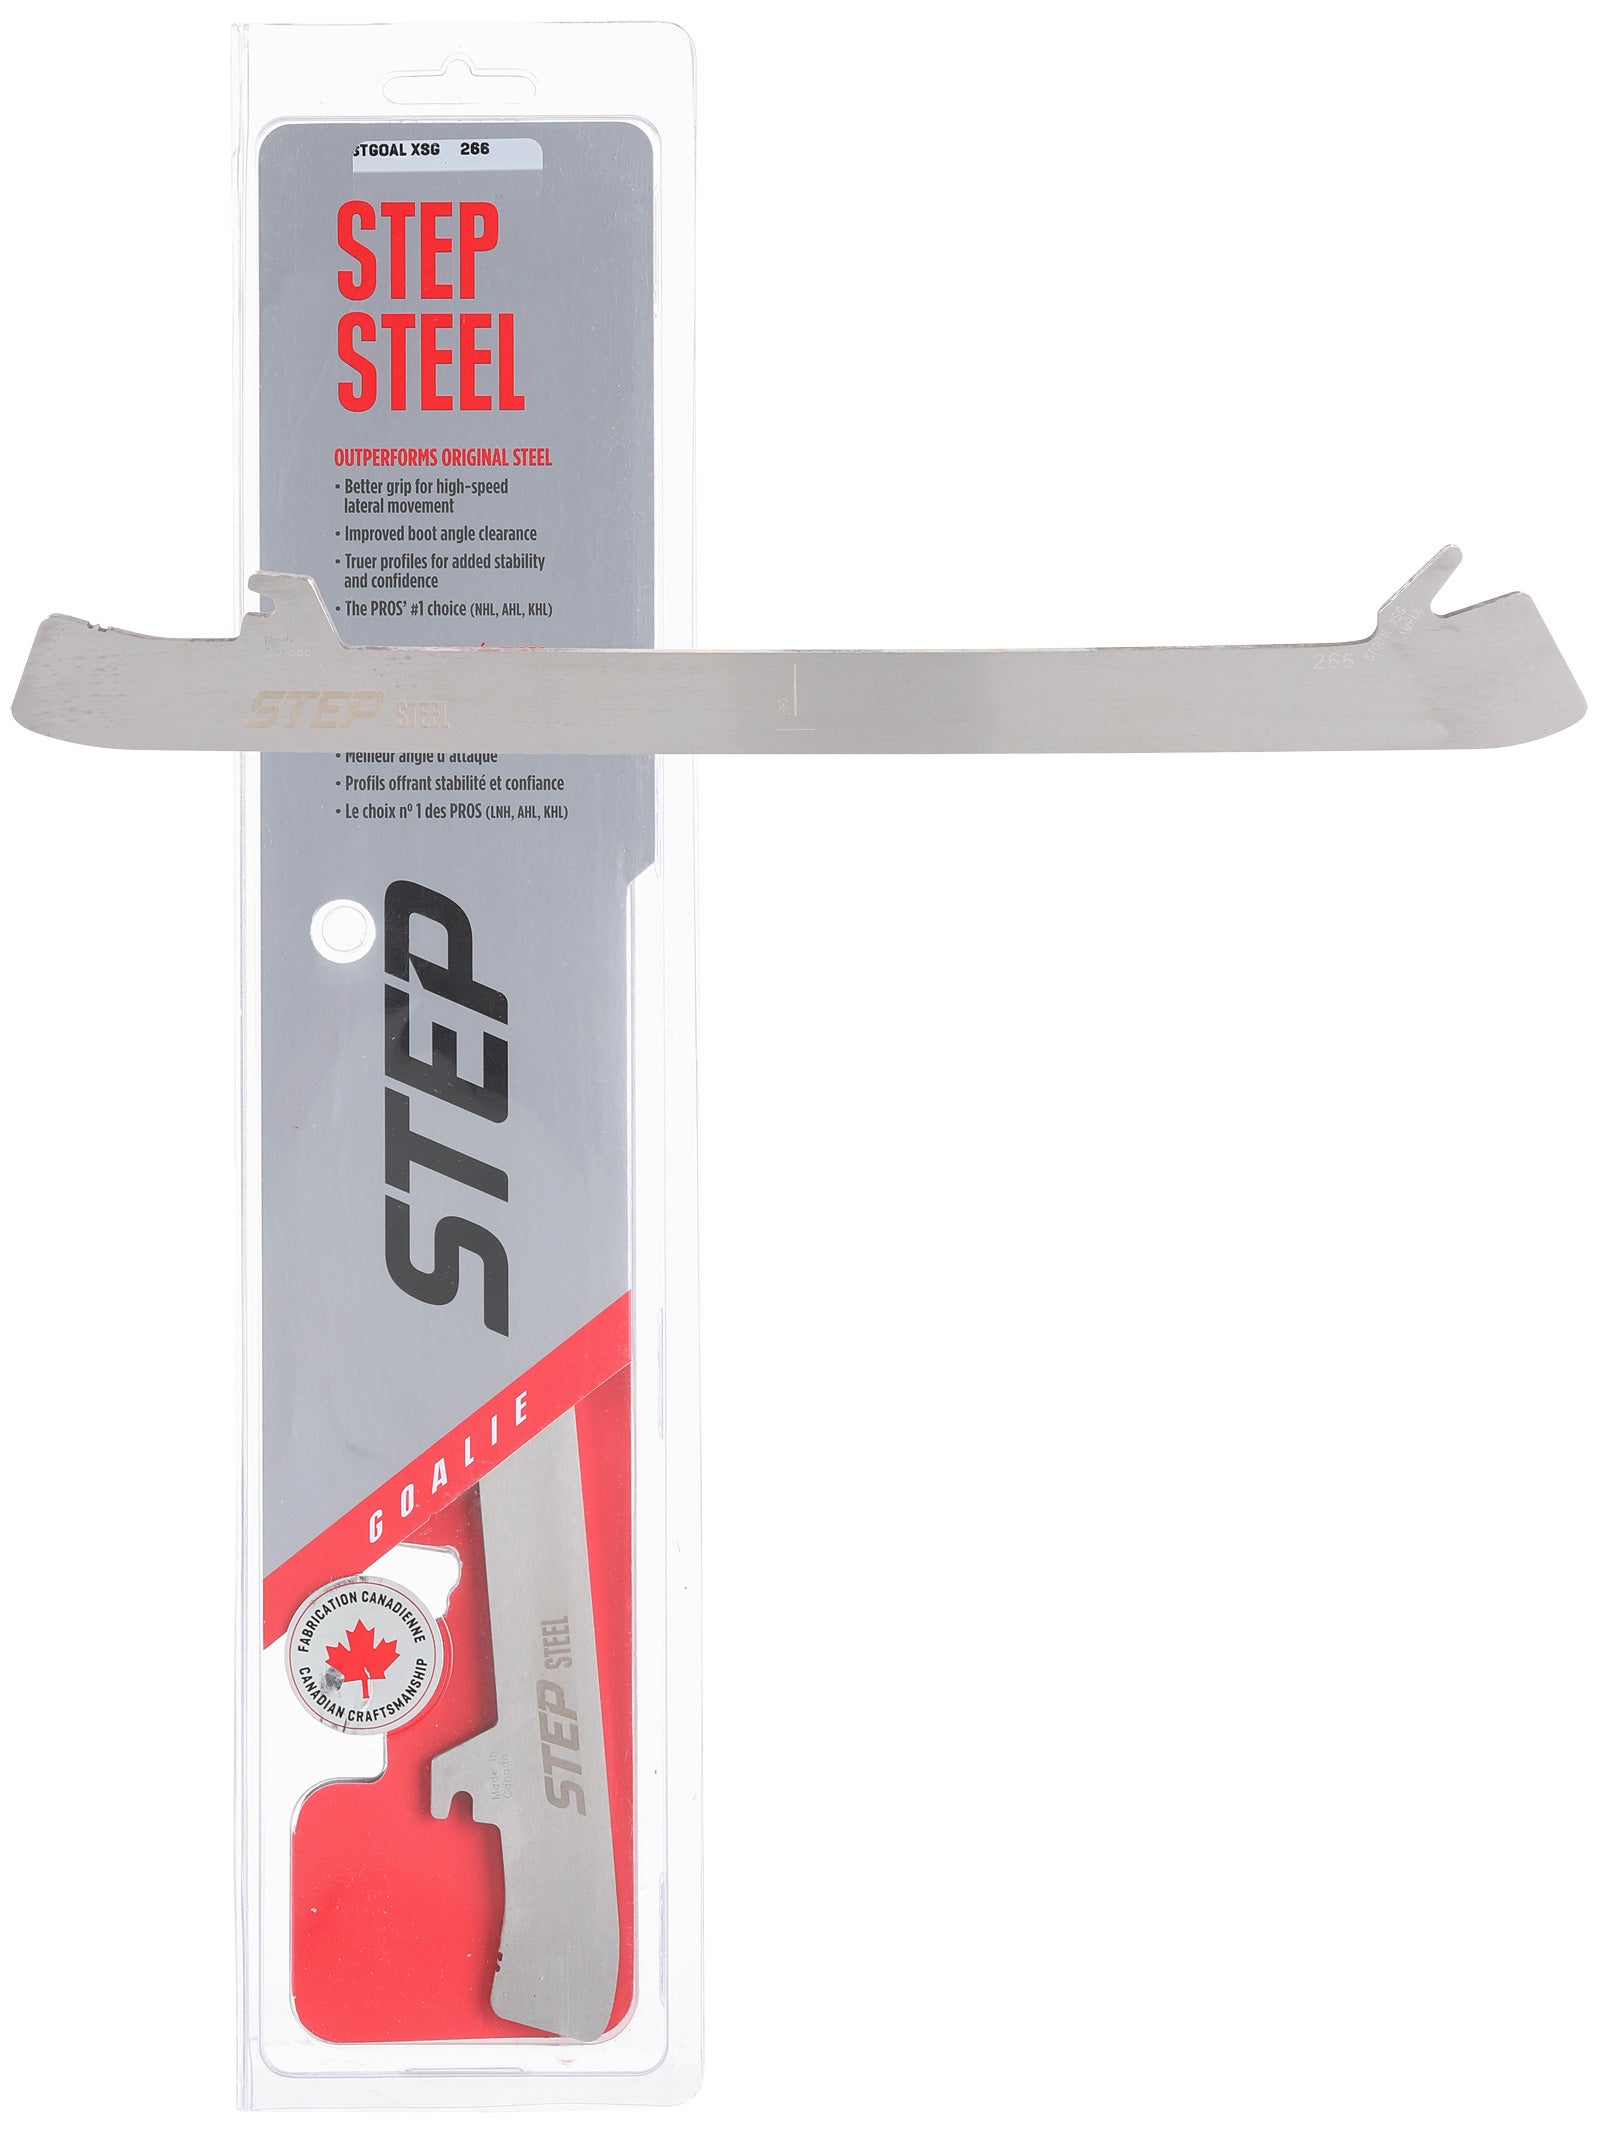 Black STEP STEEL Pro XS 247 Runners for CCM FT2 Holder FREE Shipping USA Seller 